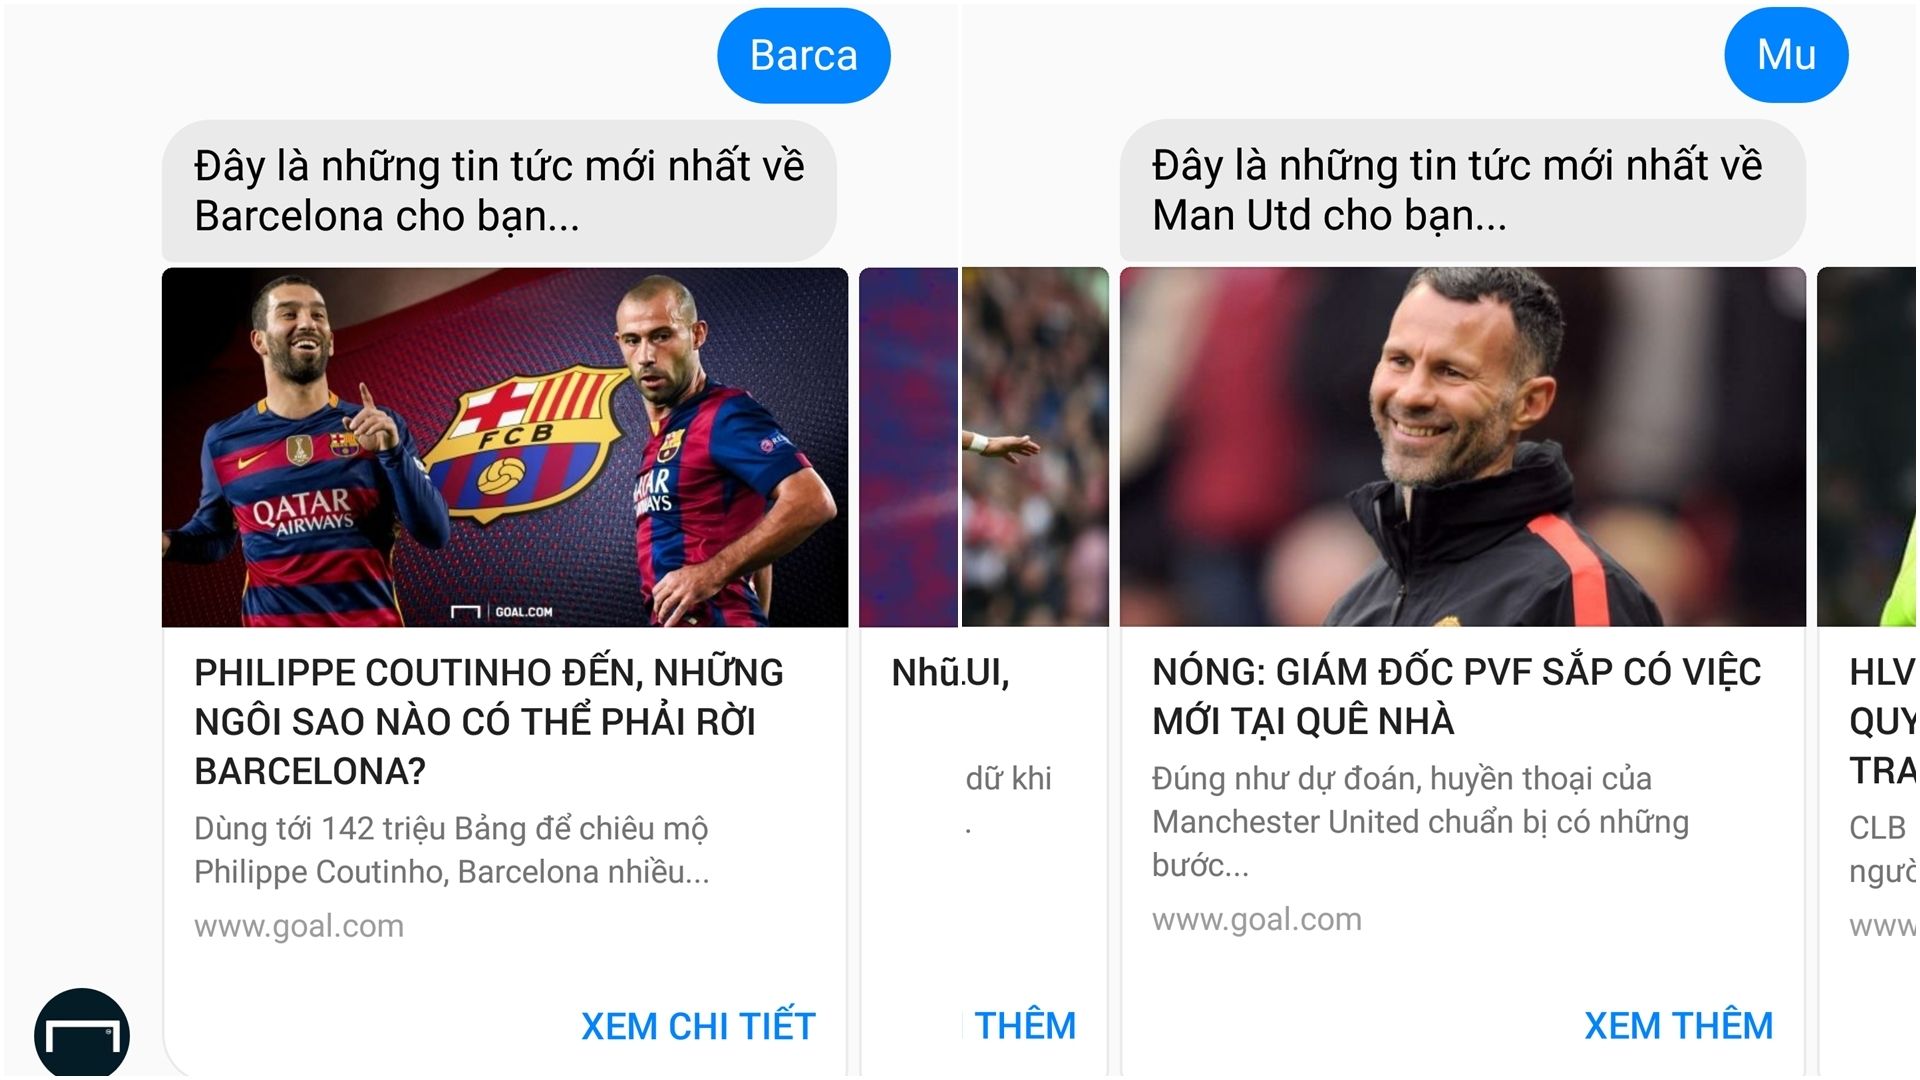 Goal.com Vietnam Chatbot